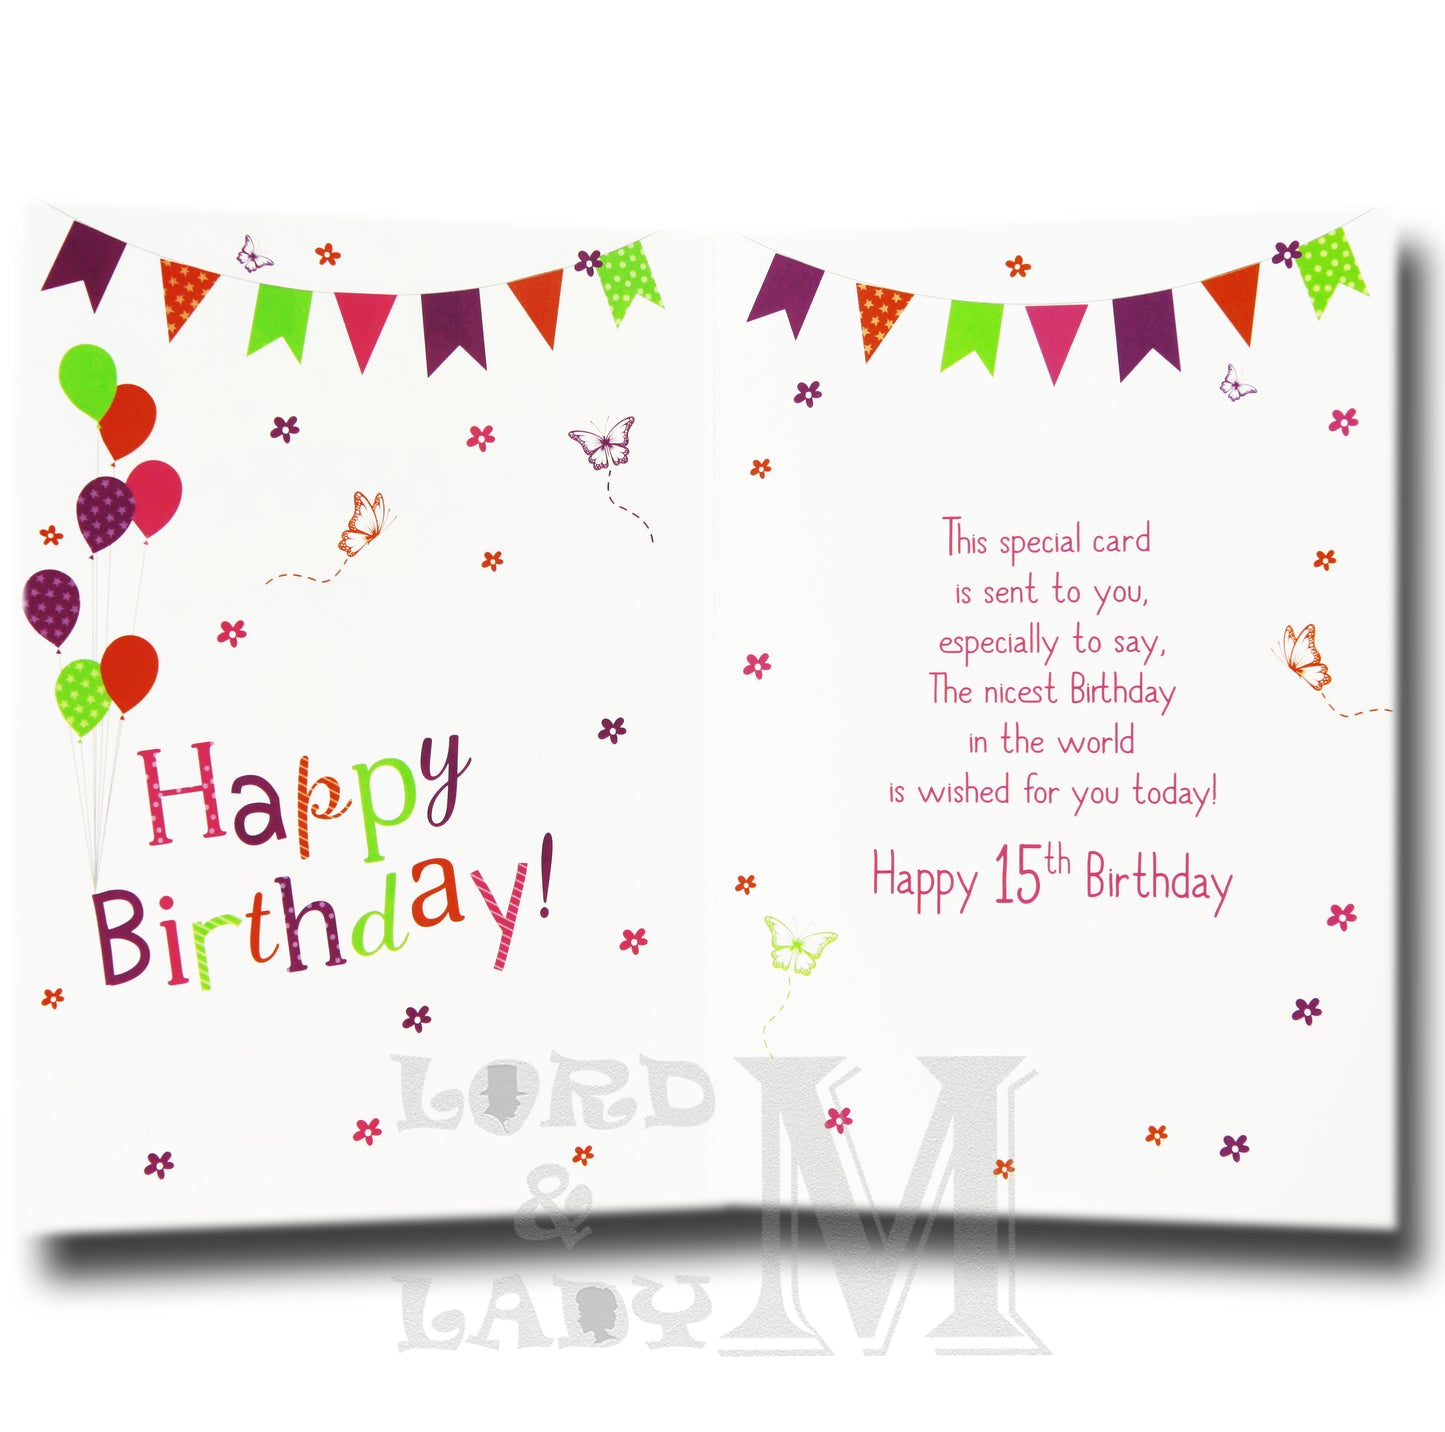 19cm - 15 Happy Birthday! - Balloons Bunting - BGC